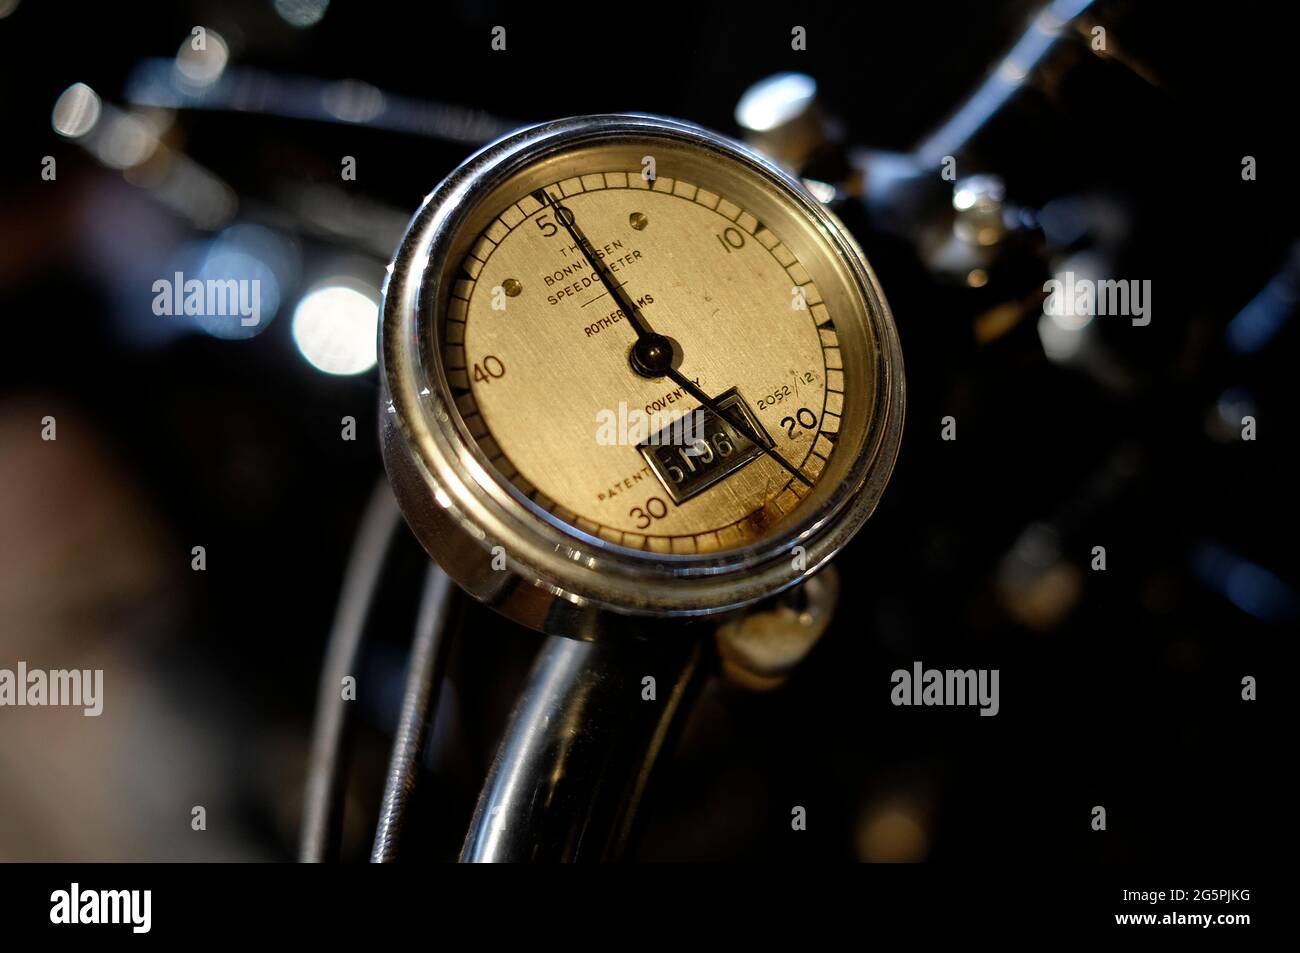 old vintage motorcycle speedometer handlebars Stock Photo - Alamy